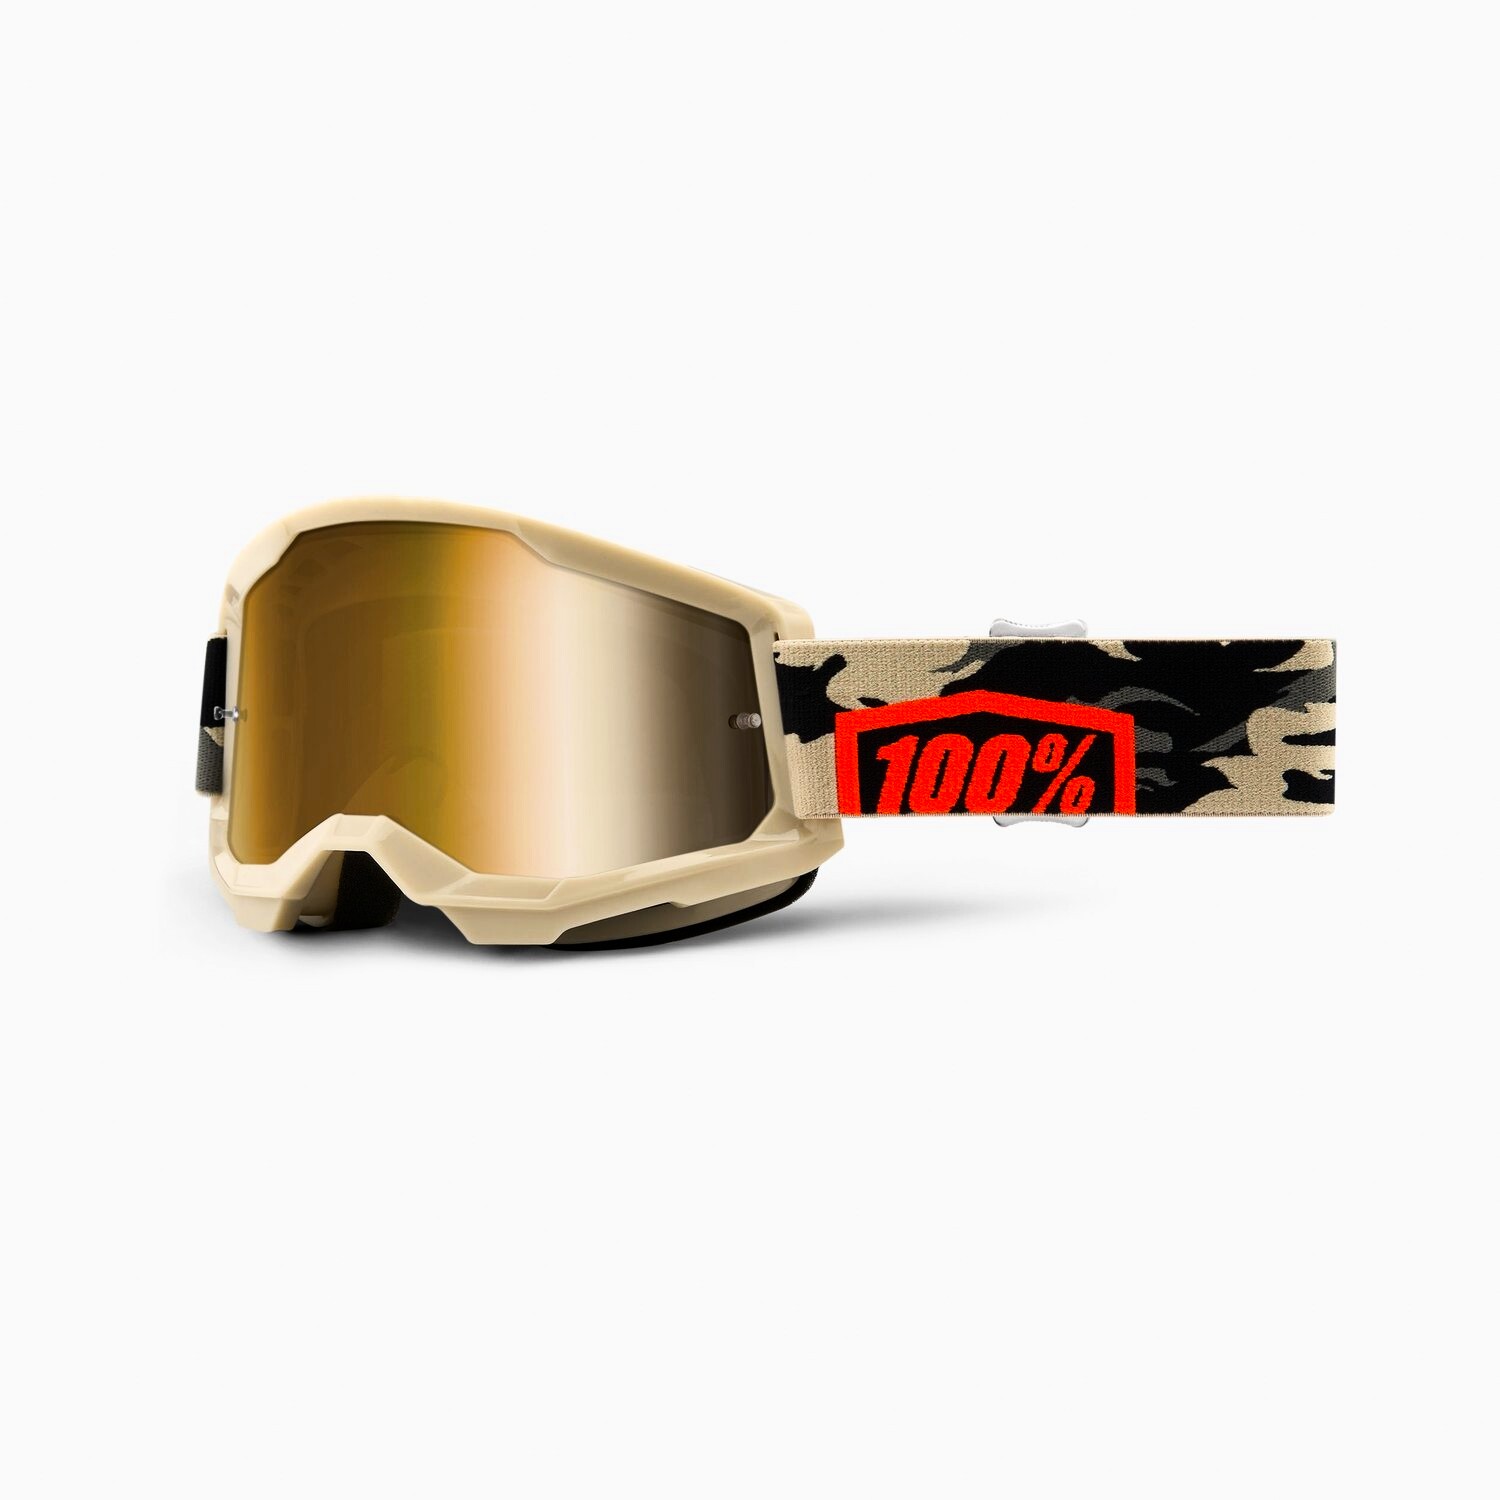 Downhill-Schutzbrille 100% Strata 2 Goggle Kombat - True Gold Lens